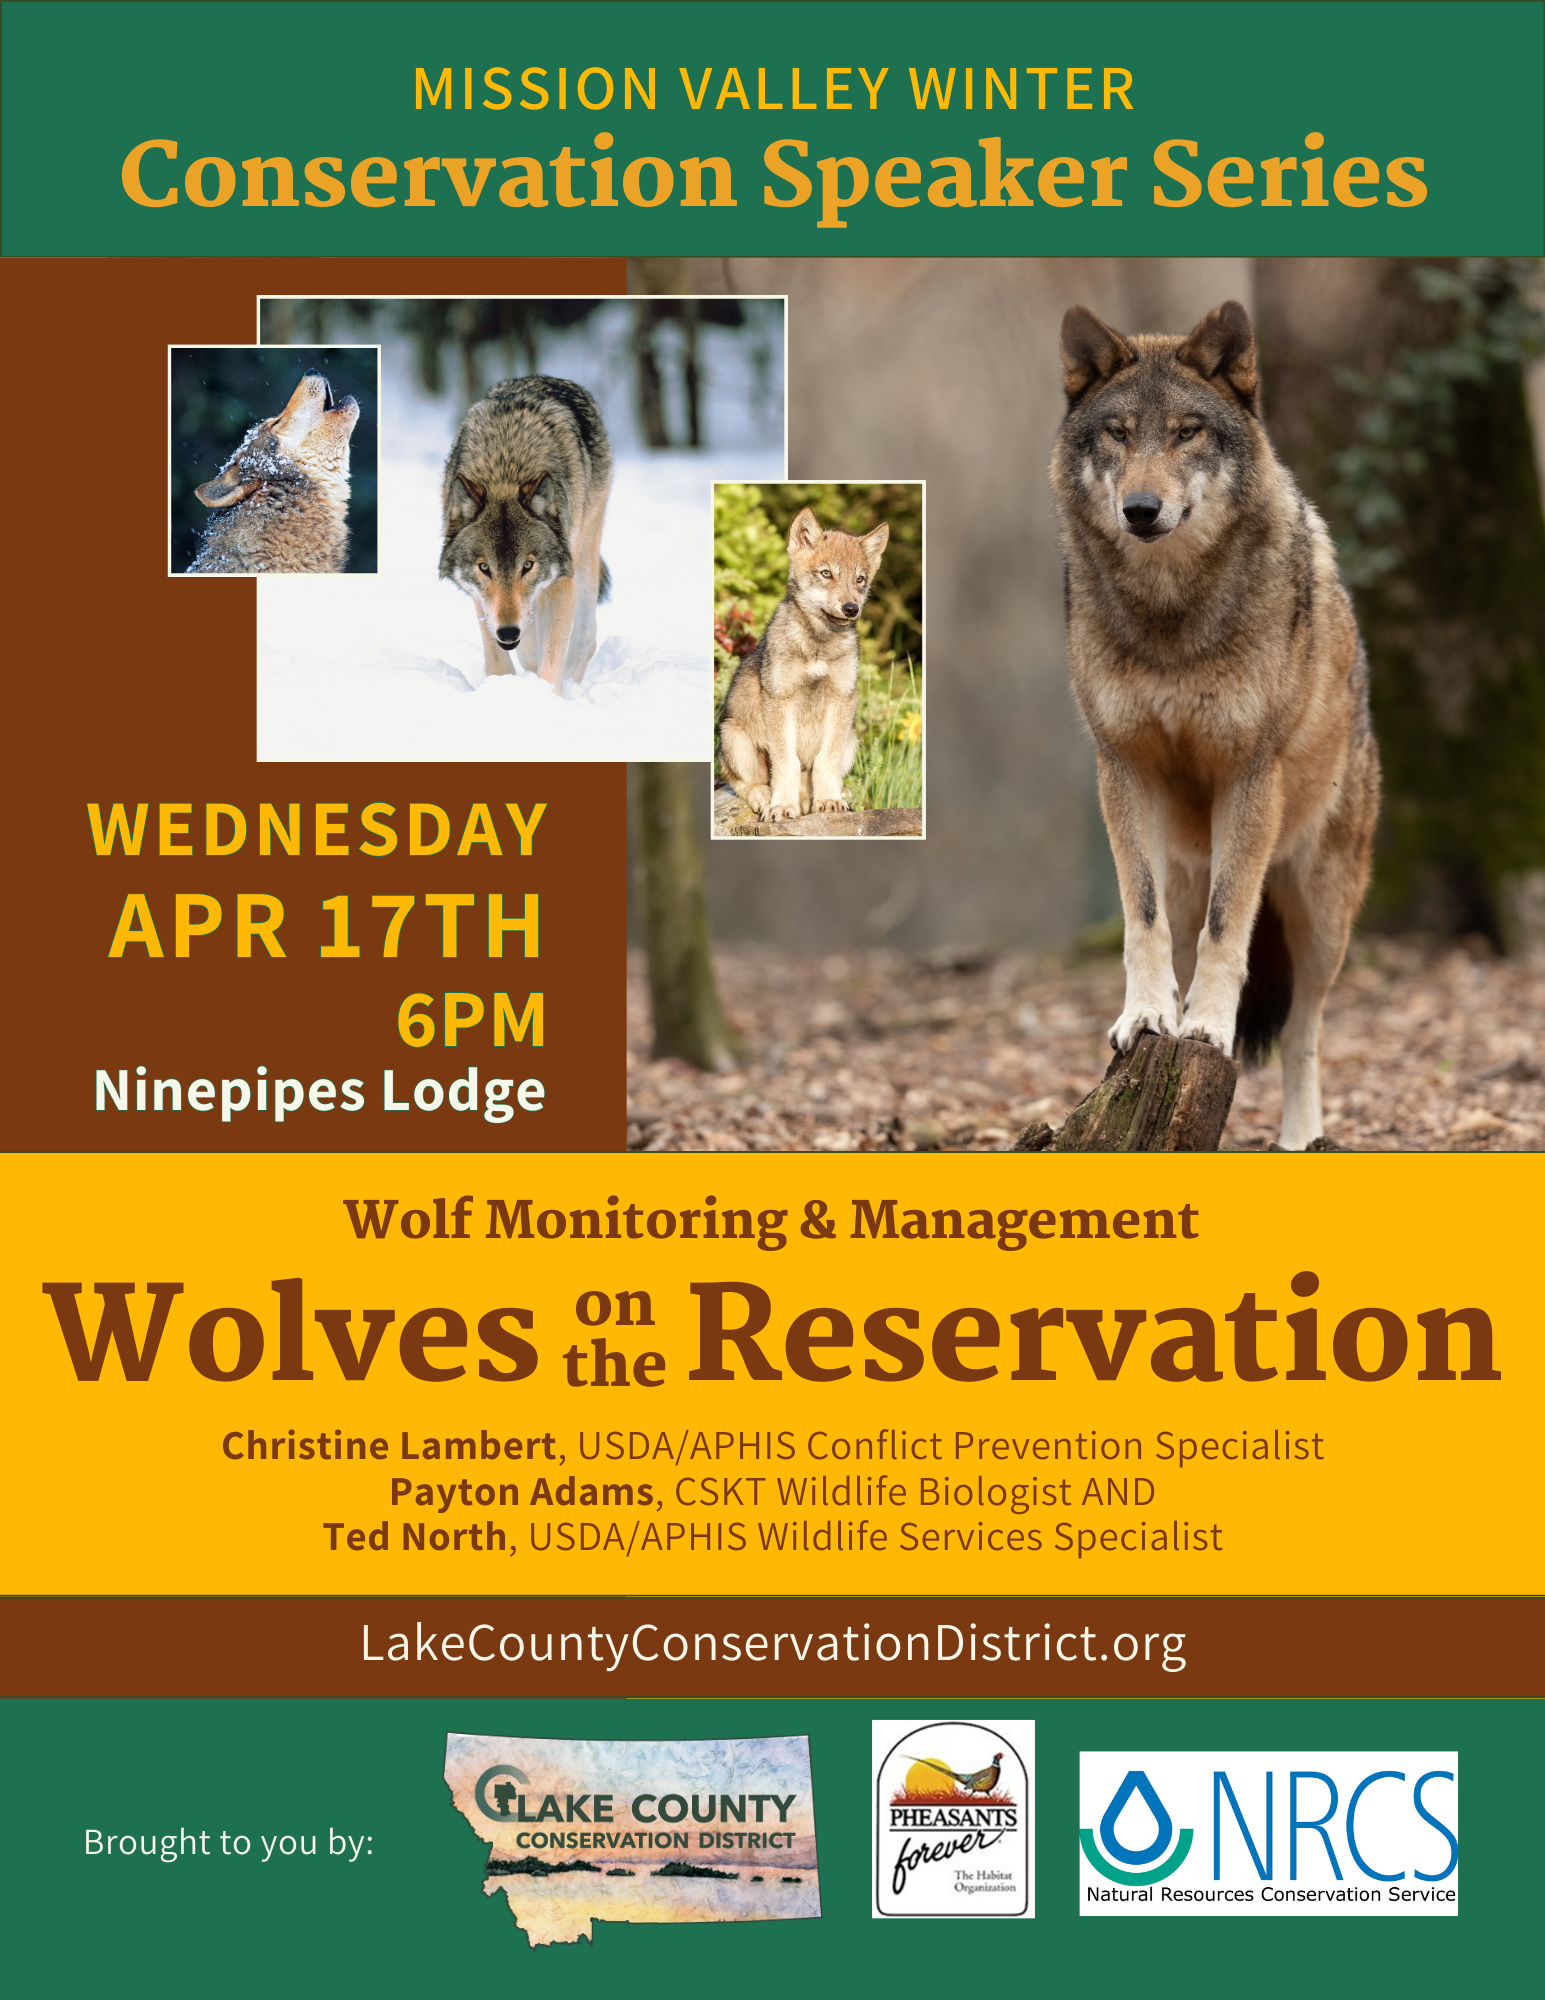 Speaker Series: Wolves on the Reservation @ Ninepipes Lodge--Allentown Restaurant